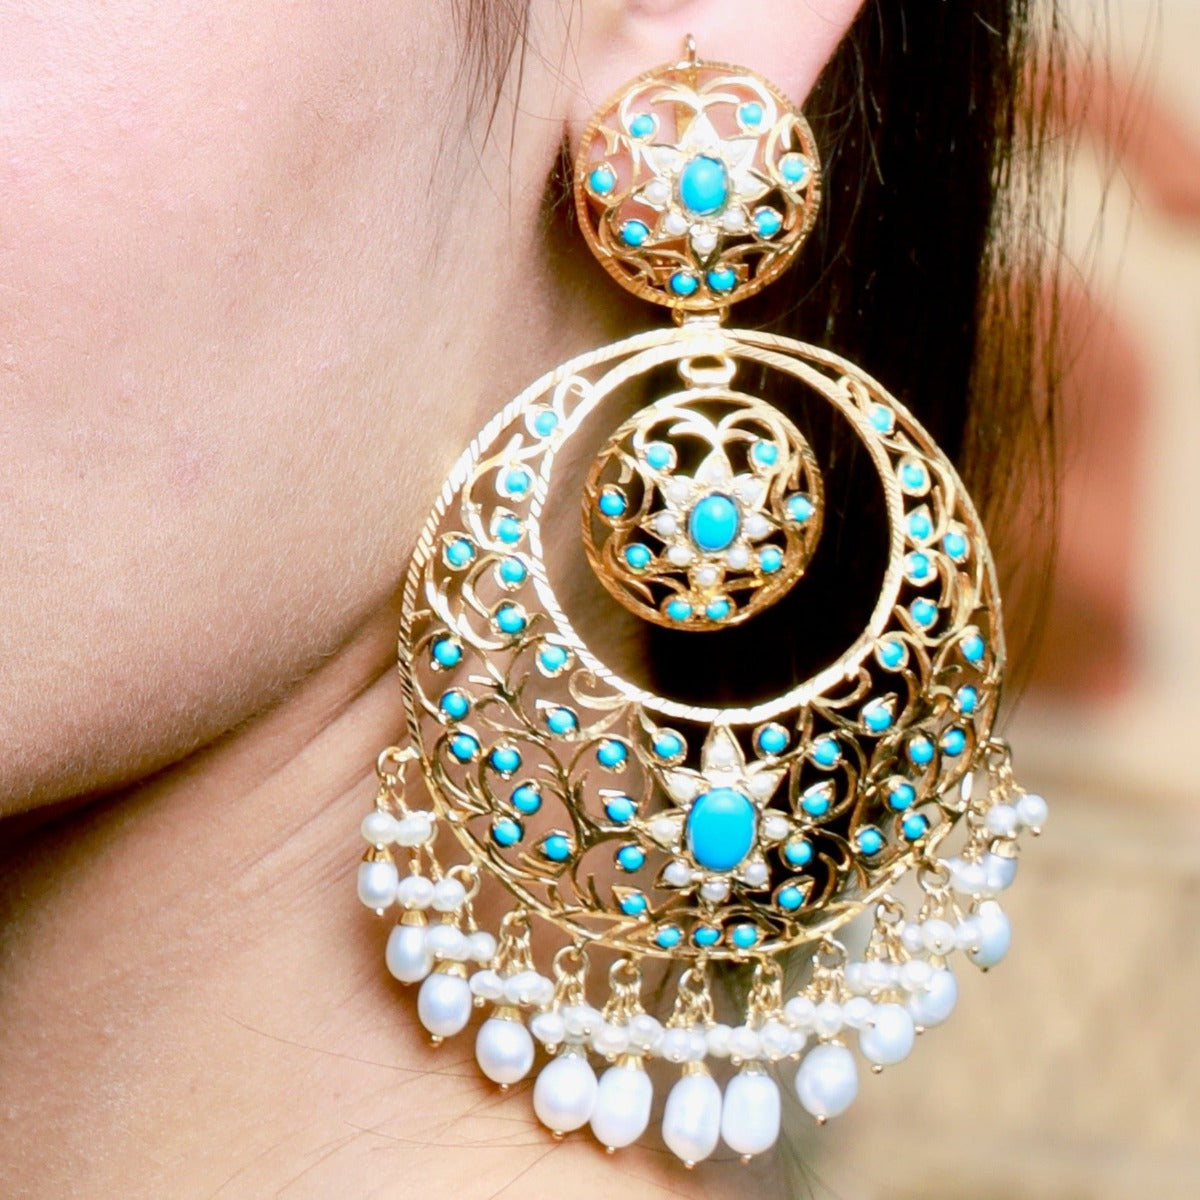 Hyderabadi chandbali earrings